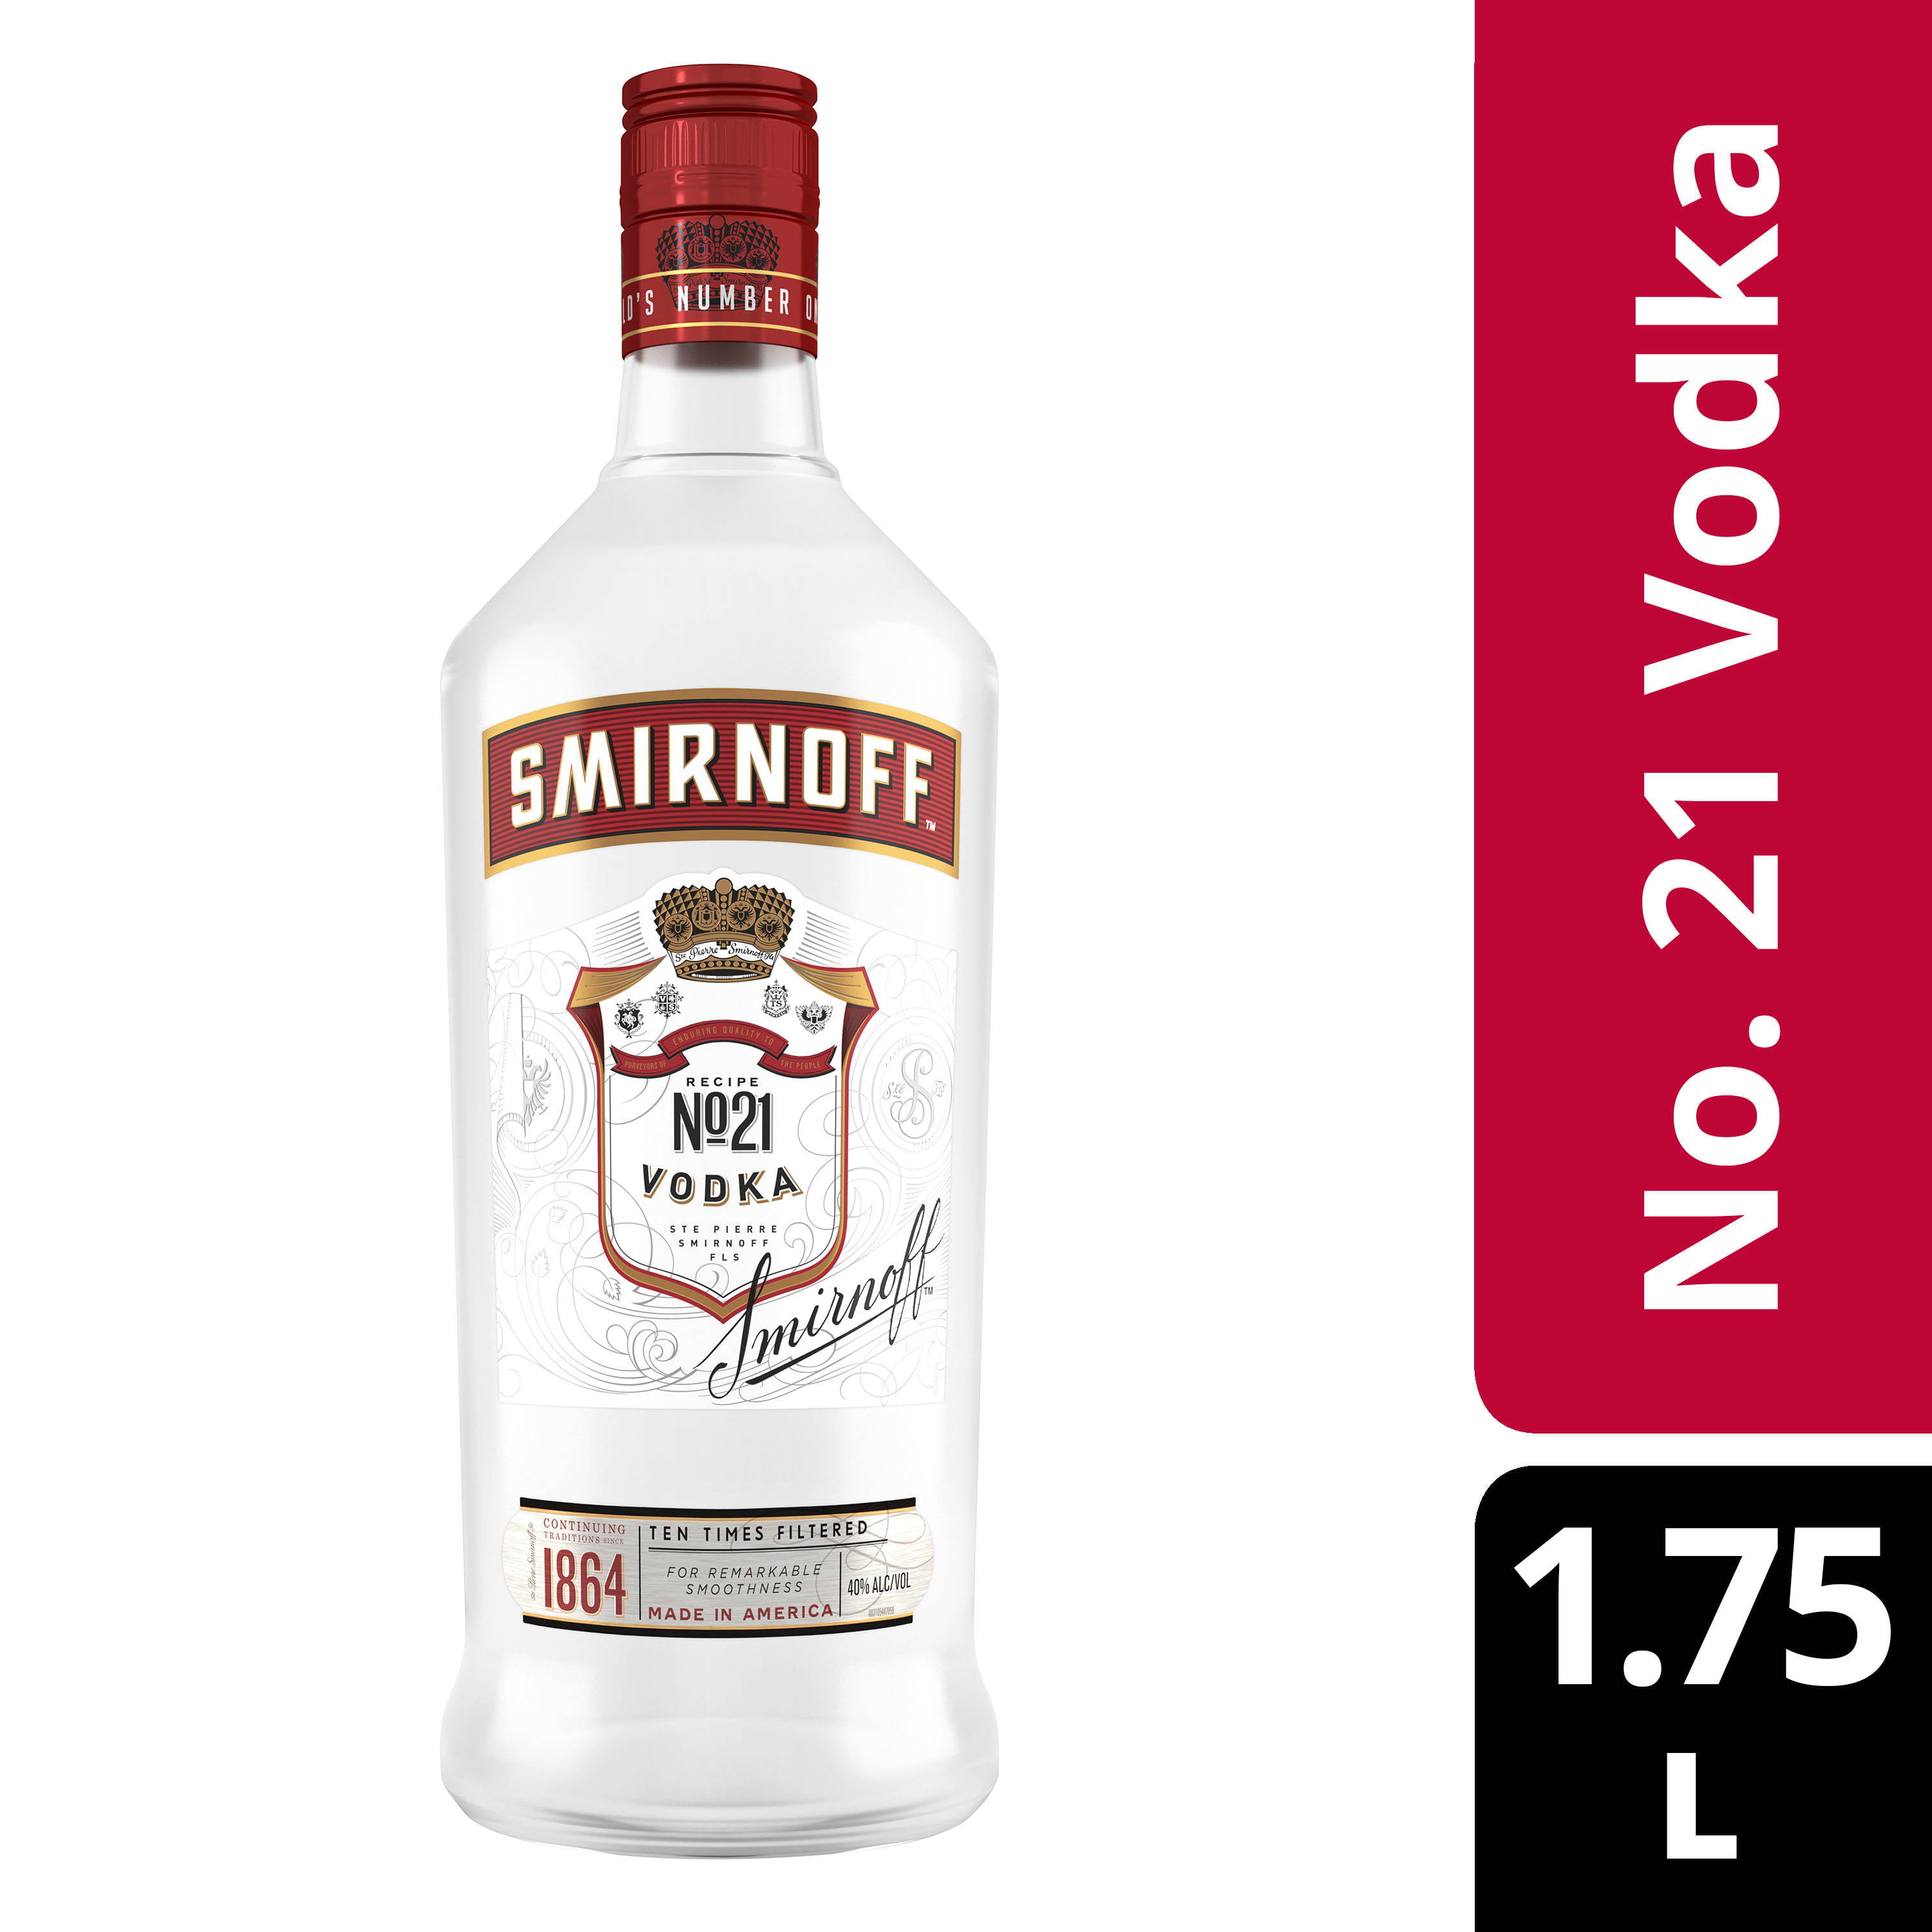 2 x Smirnoff Vodka Table top or bar top menu holders new 